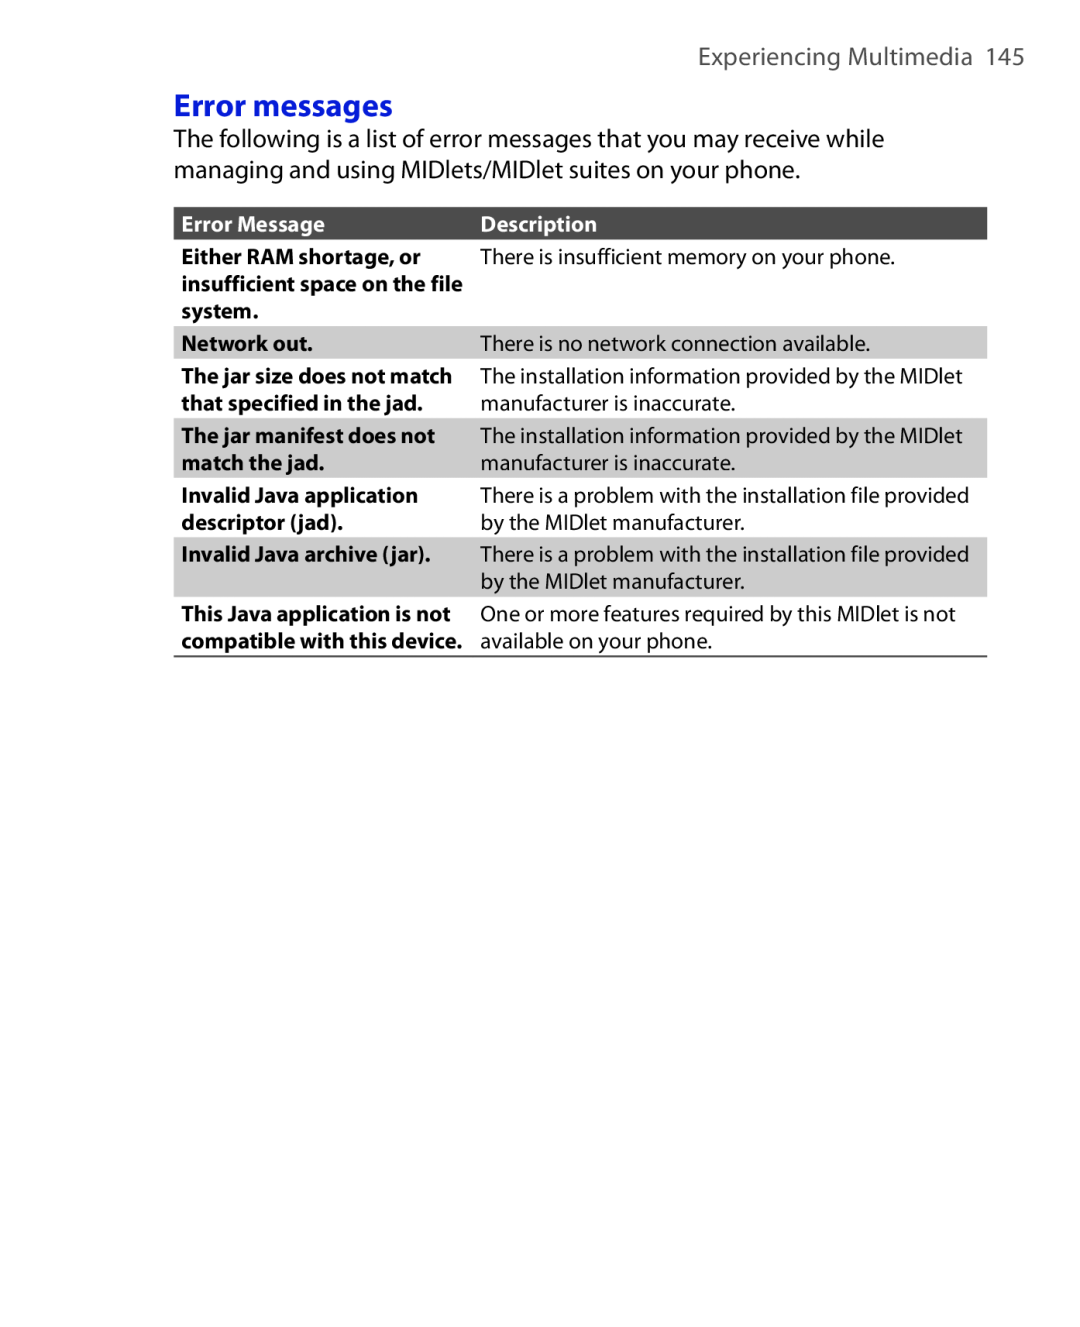 HTC HTC S621 user manual Error messages, Experiencing Multimedia, Error Message, Description 